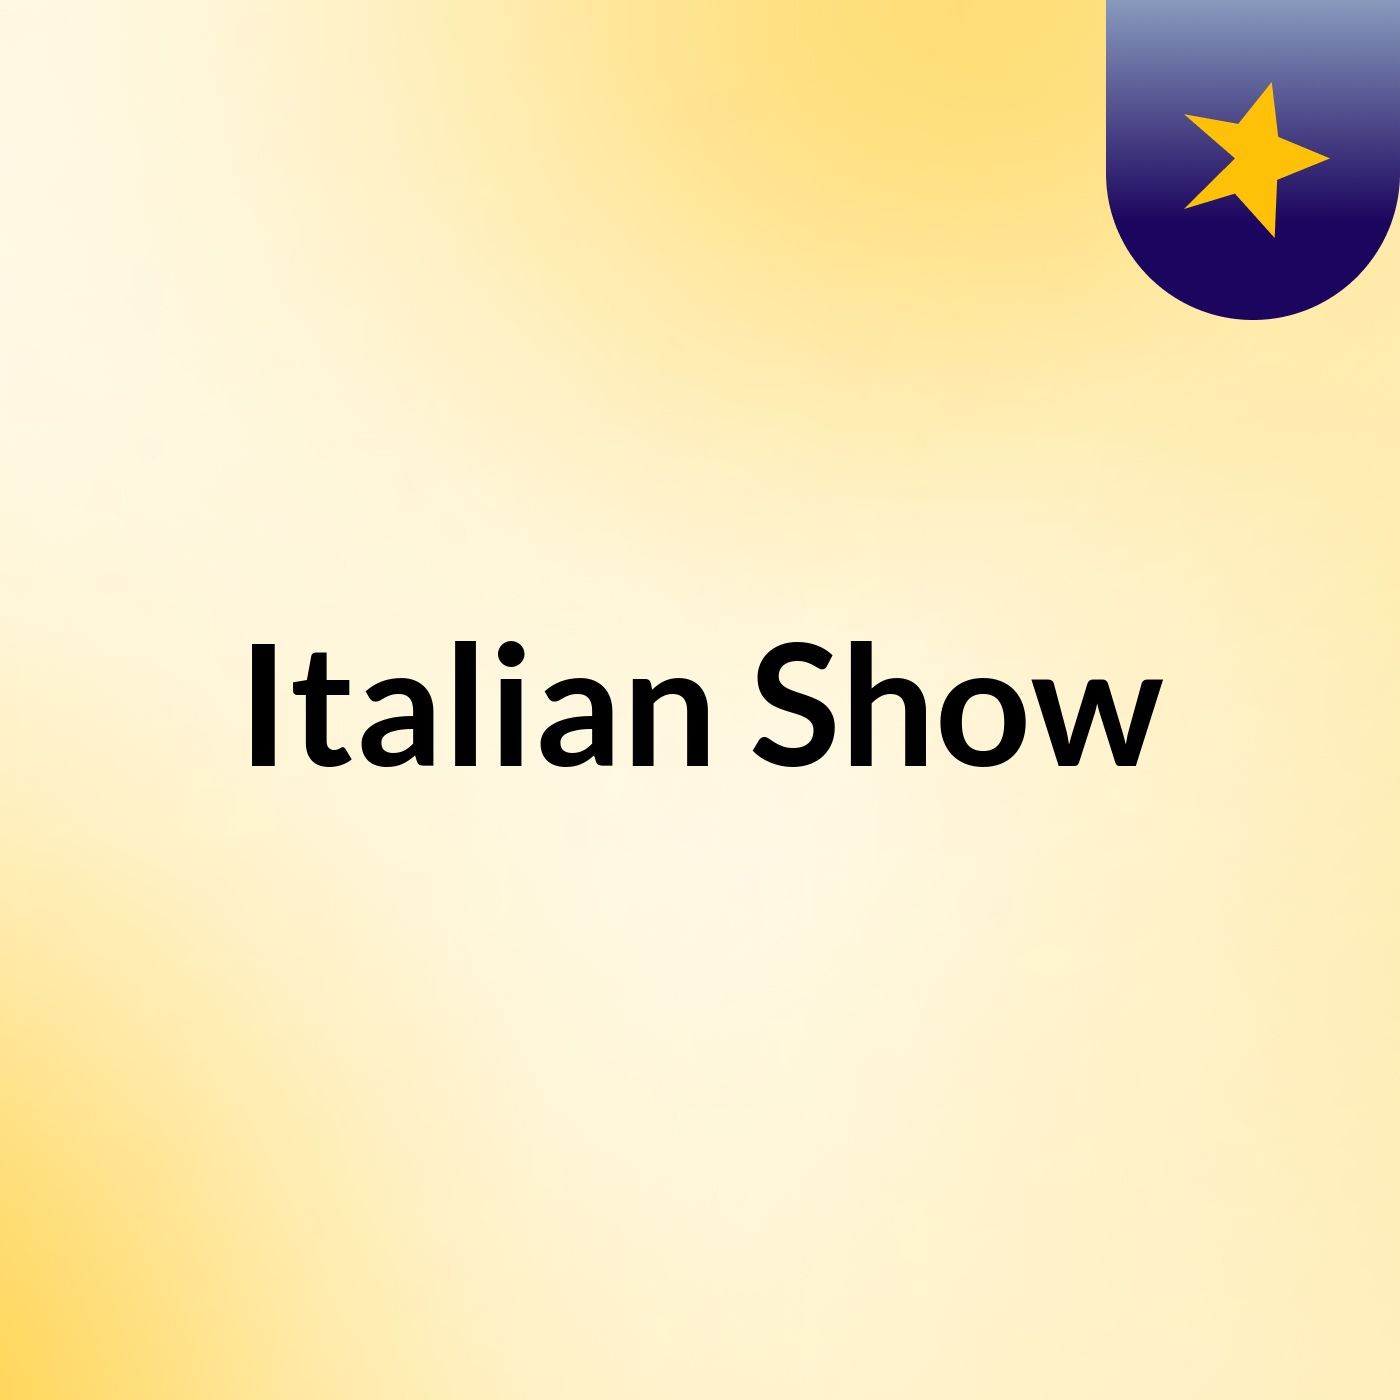 Italian Show